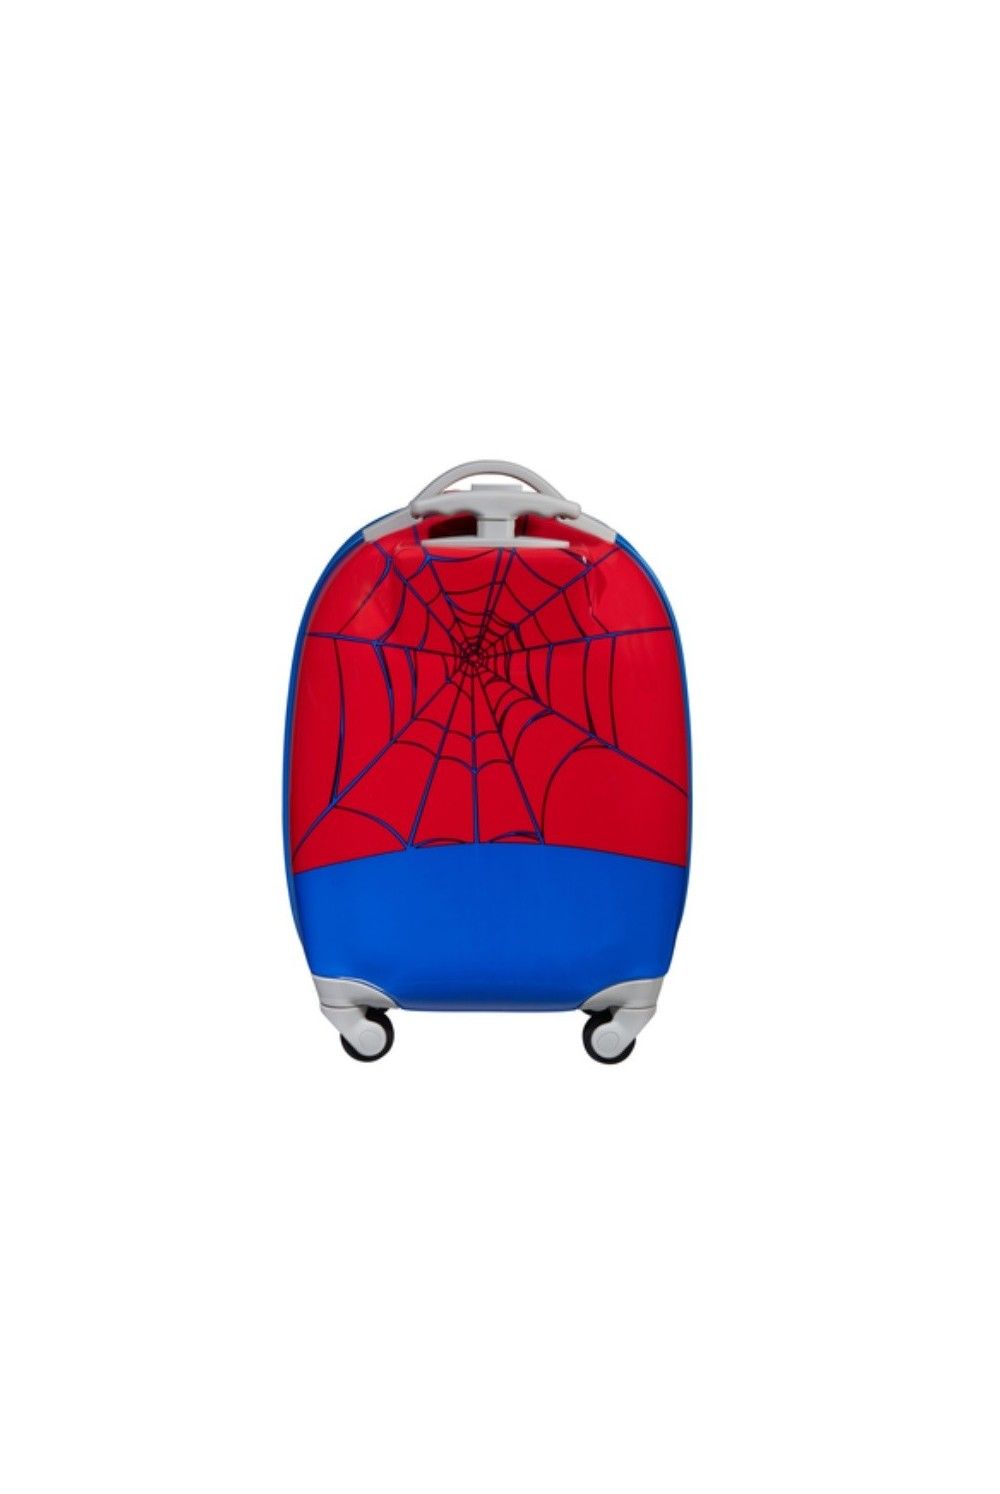 Valise pour enfants Disney Ultimate 2.0 Marvel Spider-Man 46 cm 4 roues